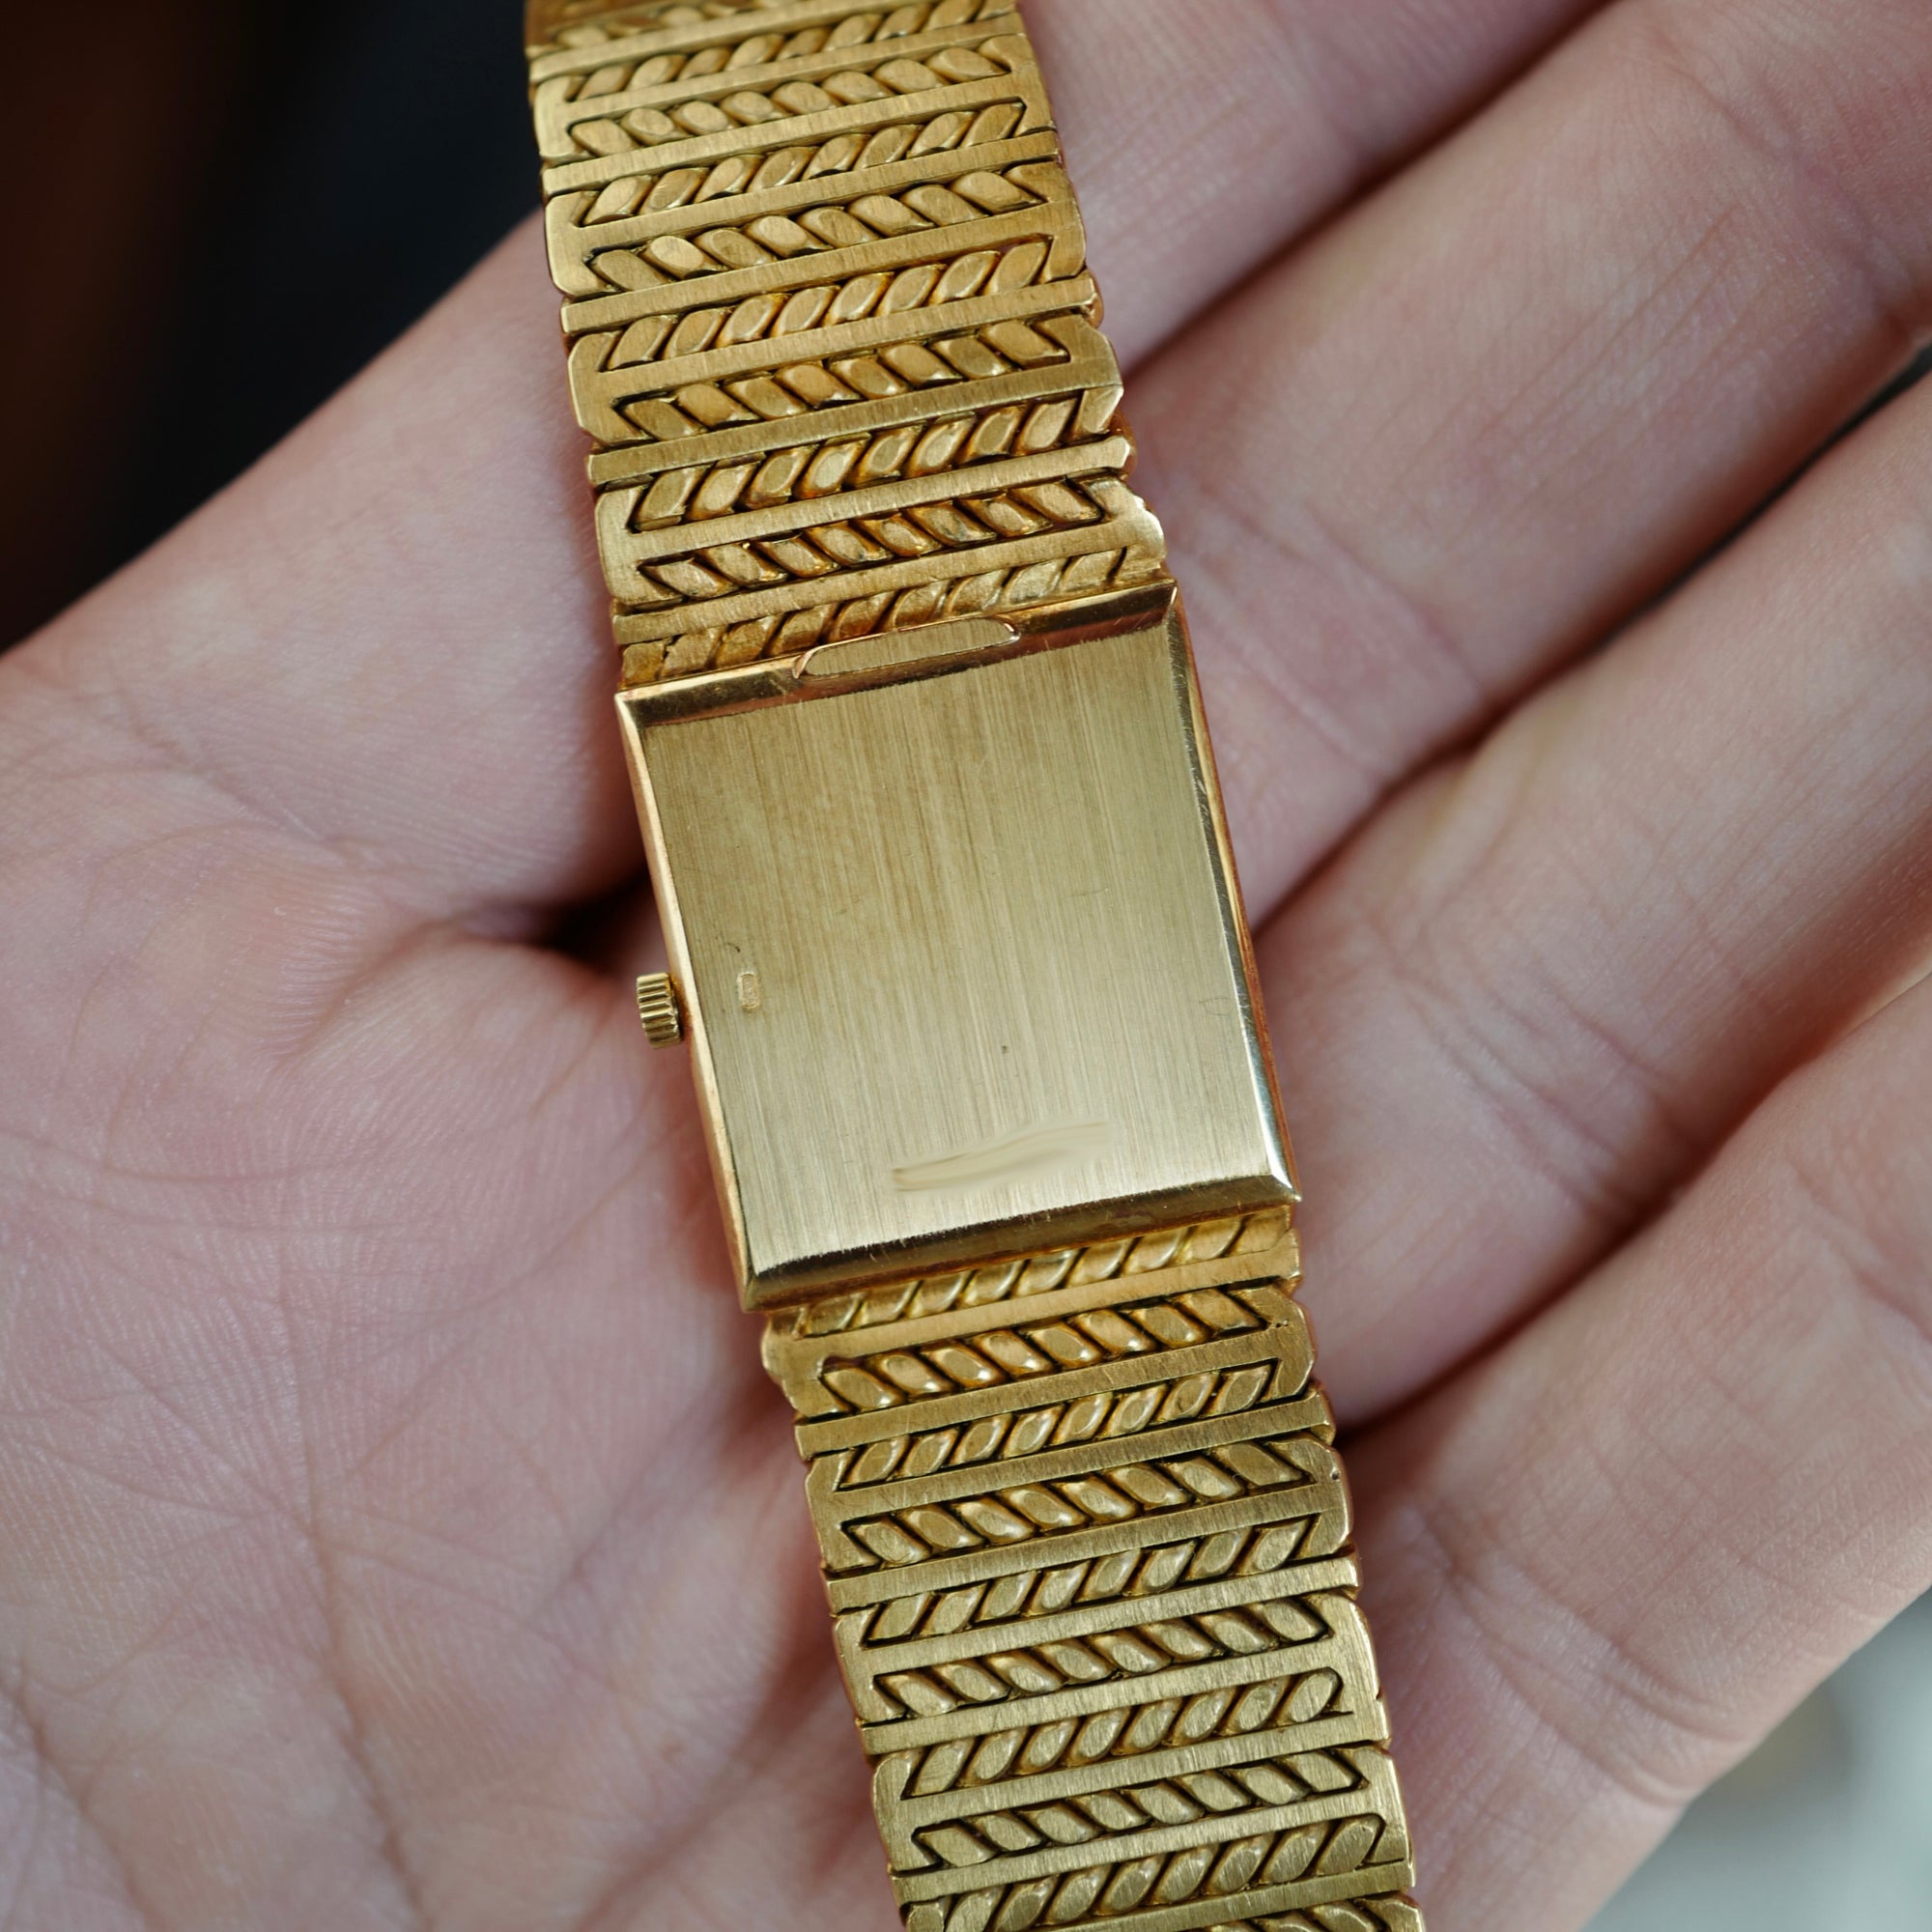 Vacheron Constantin - Vacheron Constantin Yellow Gold Mechanical Bracelet Watch (NEW ARRIVAL) - The Keystone Watches